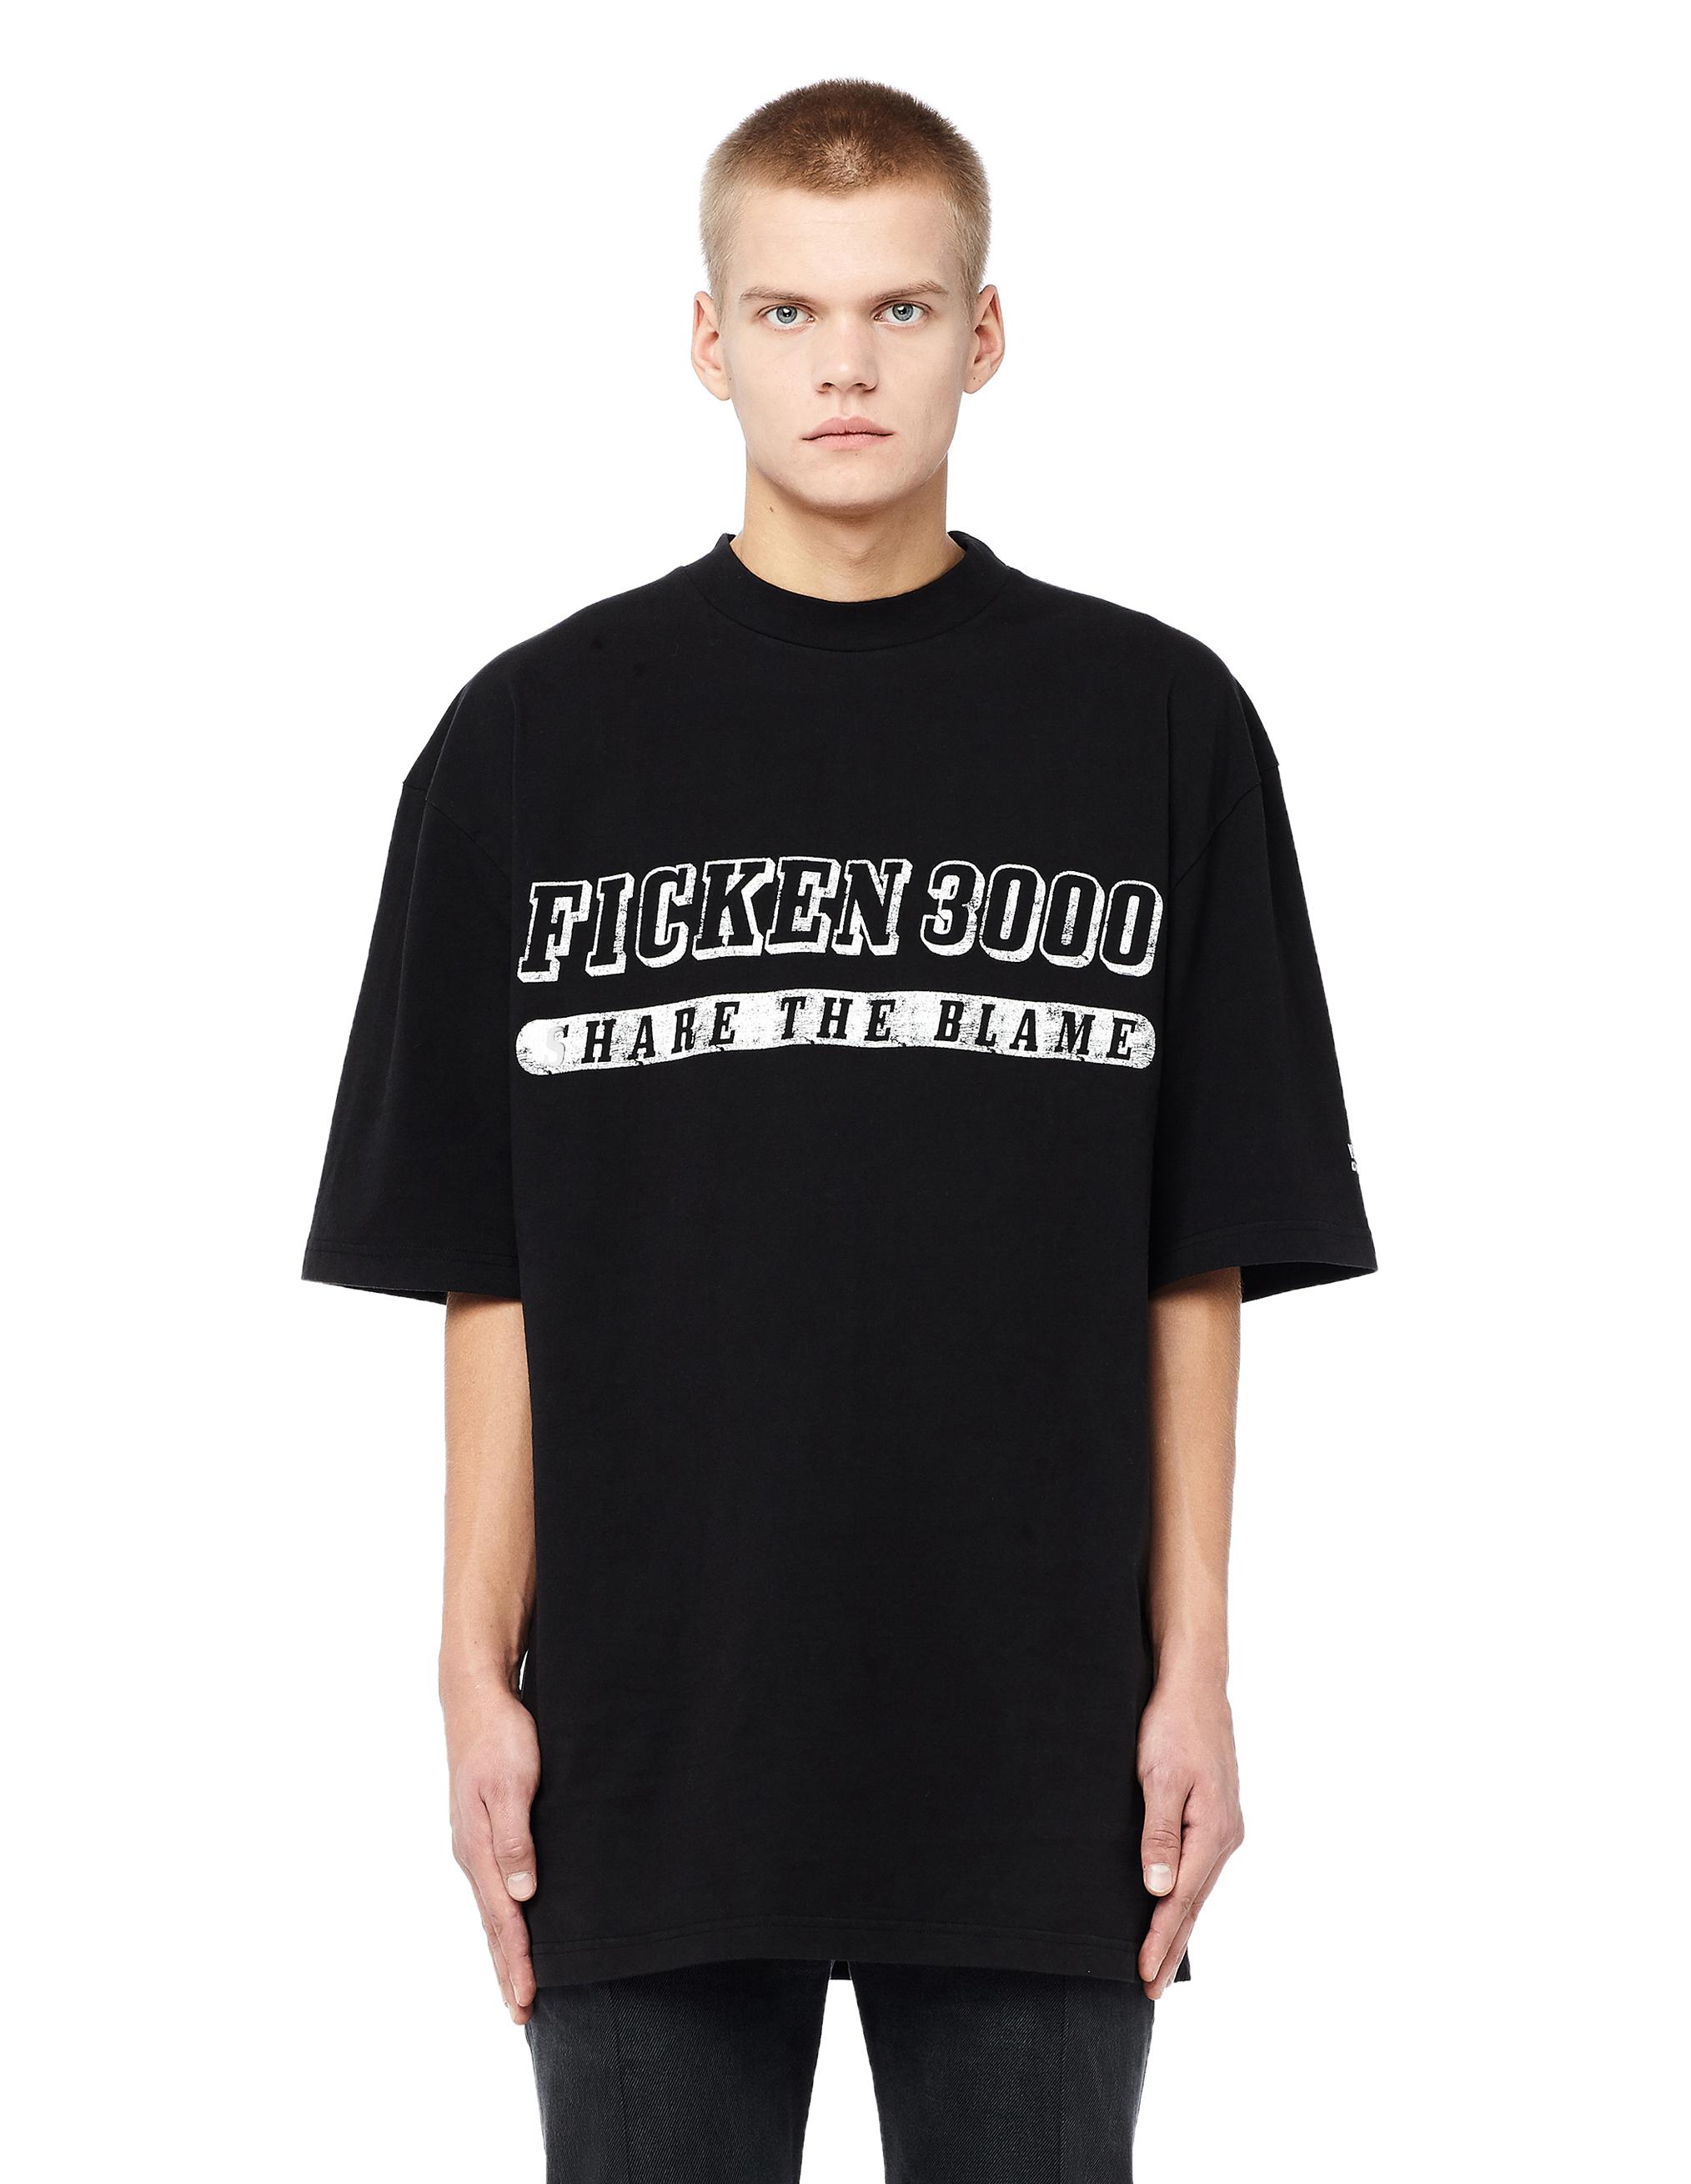 Lyst - Vetements Ficken 3000 Printed T-shirt in Black for Men